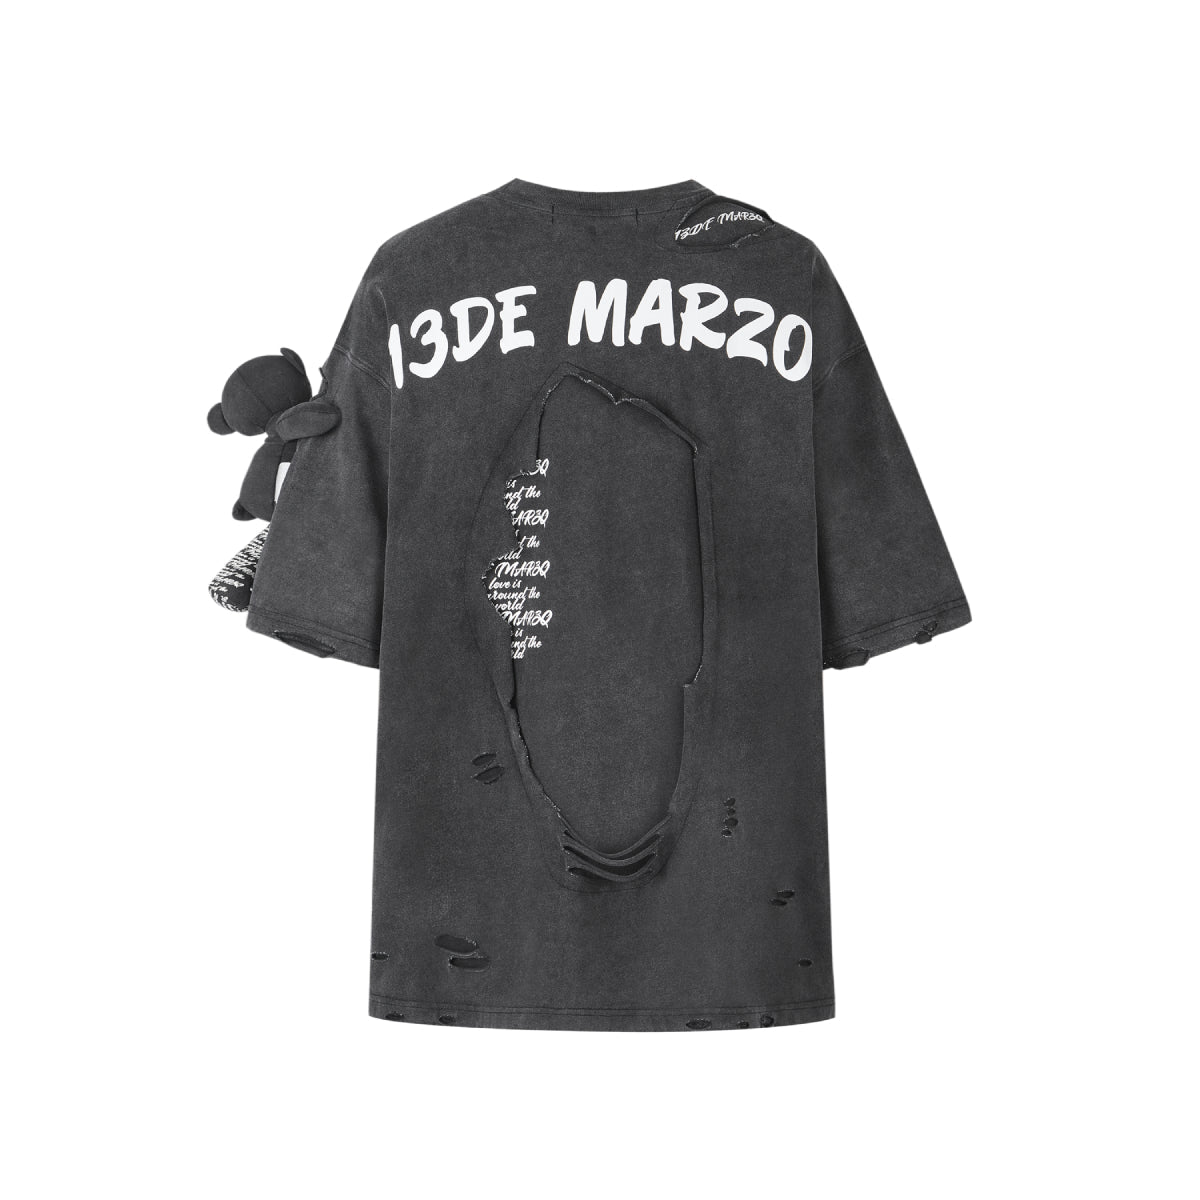 13De Marzo Destroyed Back Logo T-Shirt Black